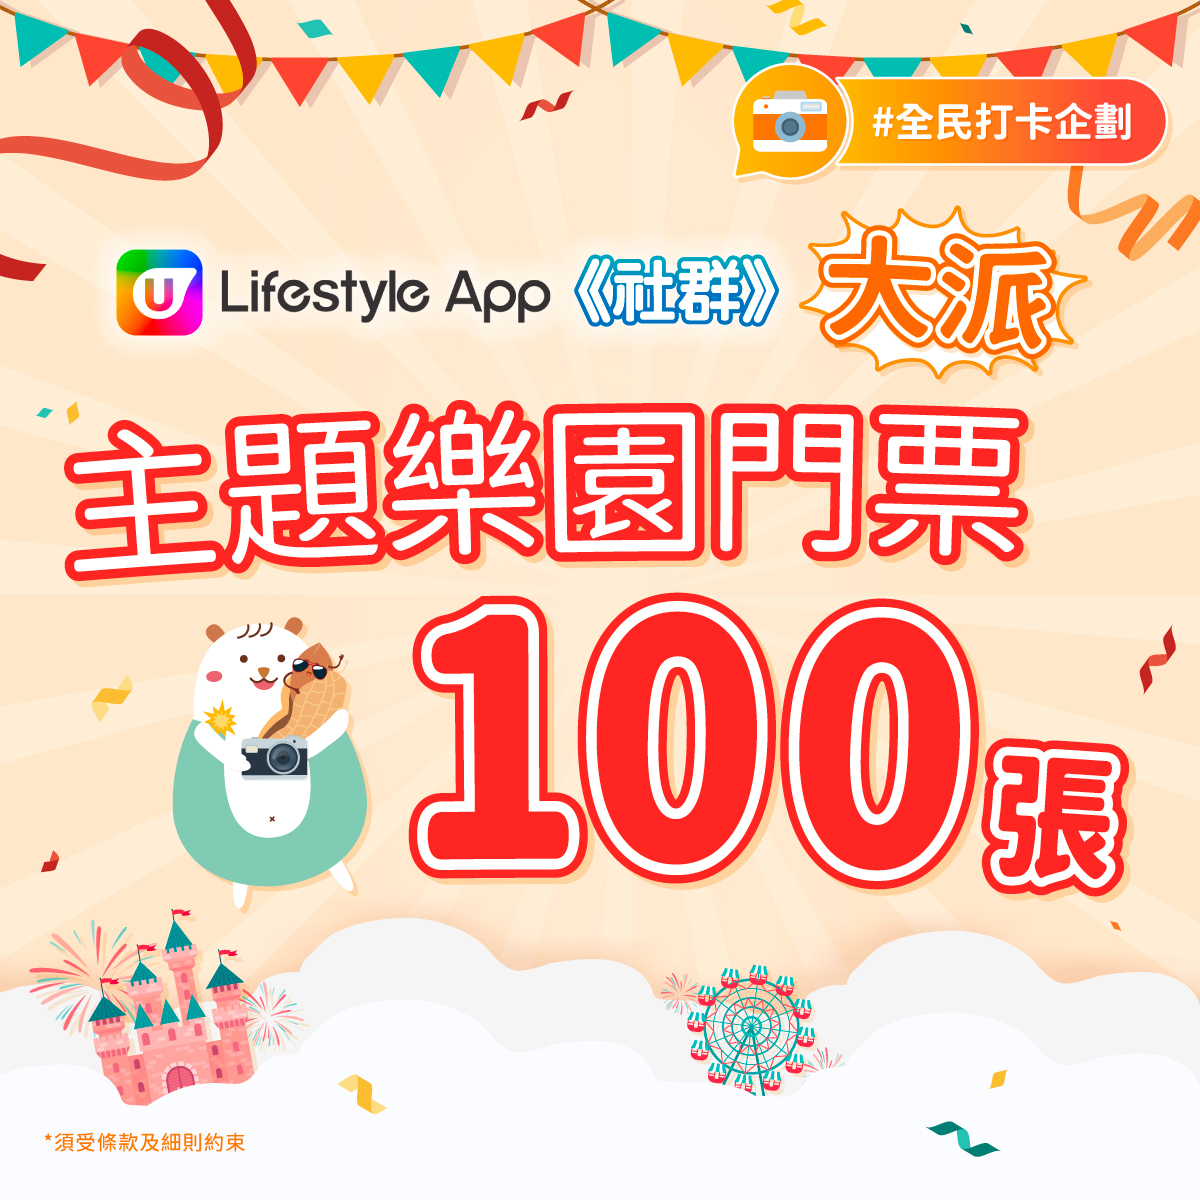 U Lifestyle App 社群大派主題樂園門票100張